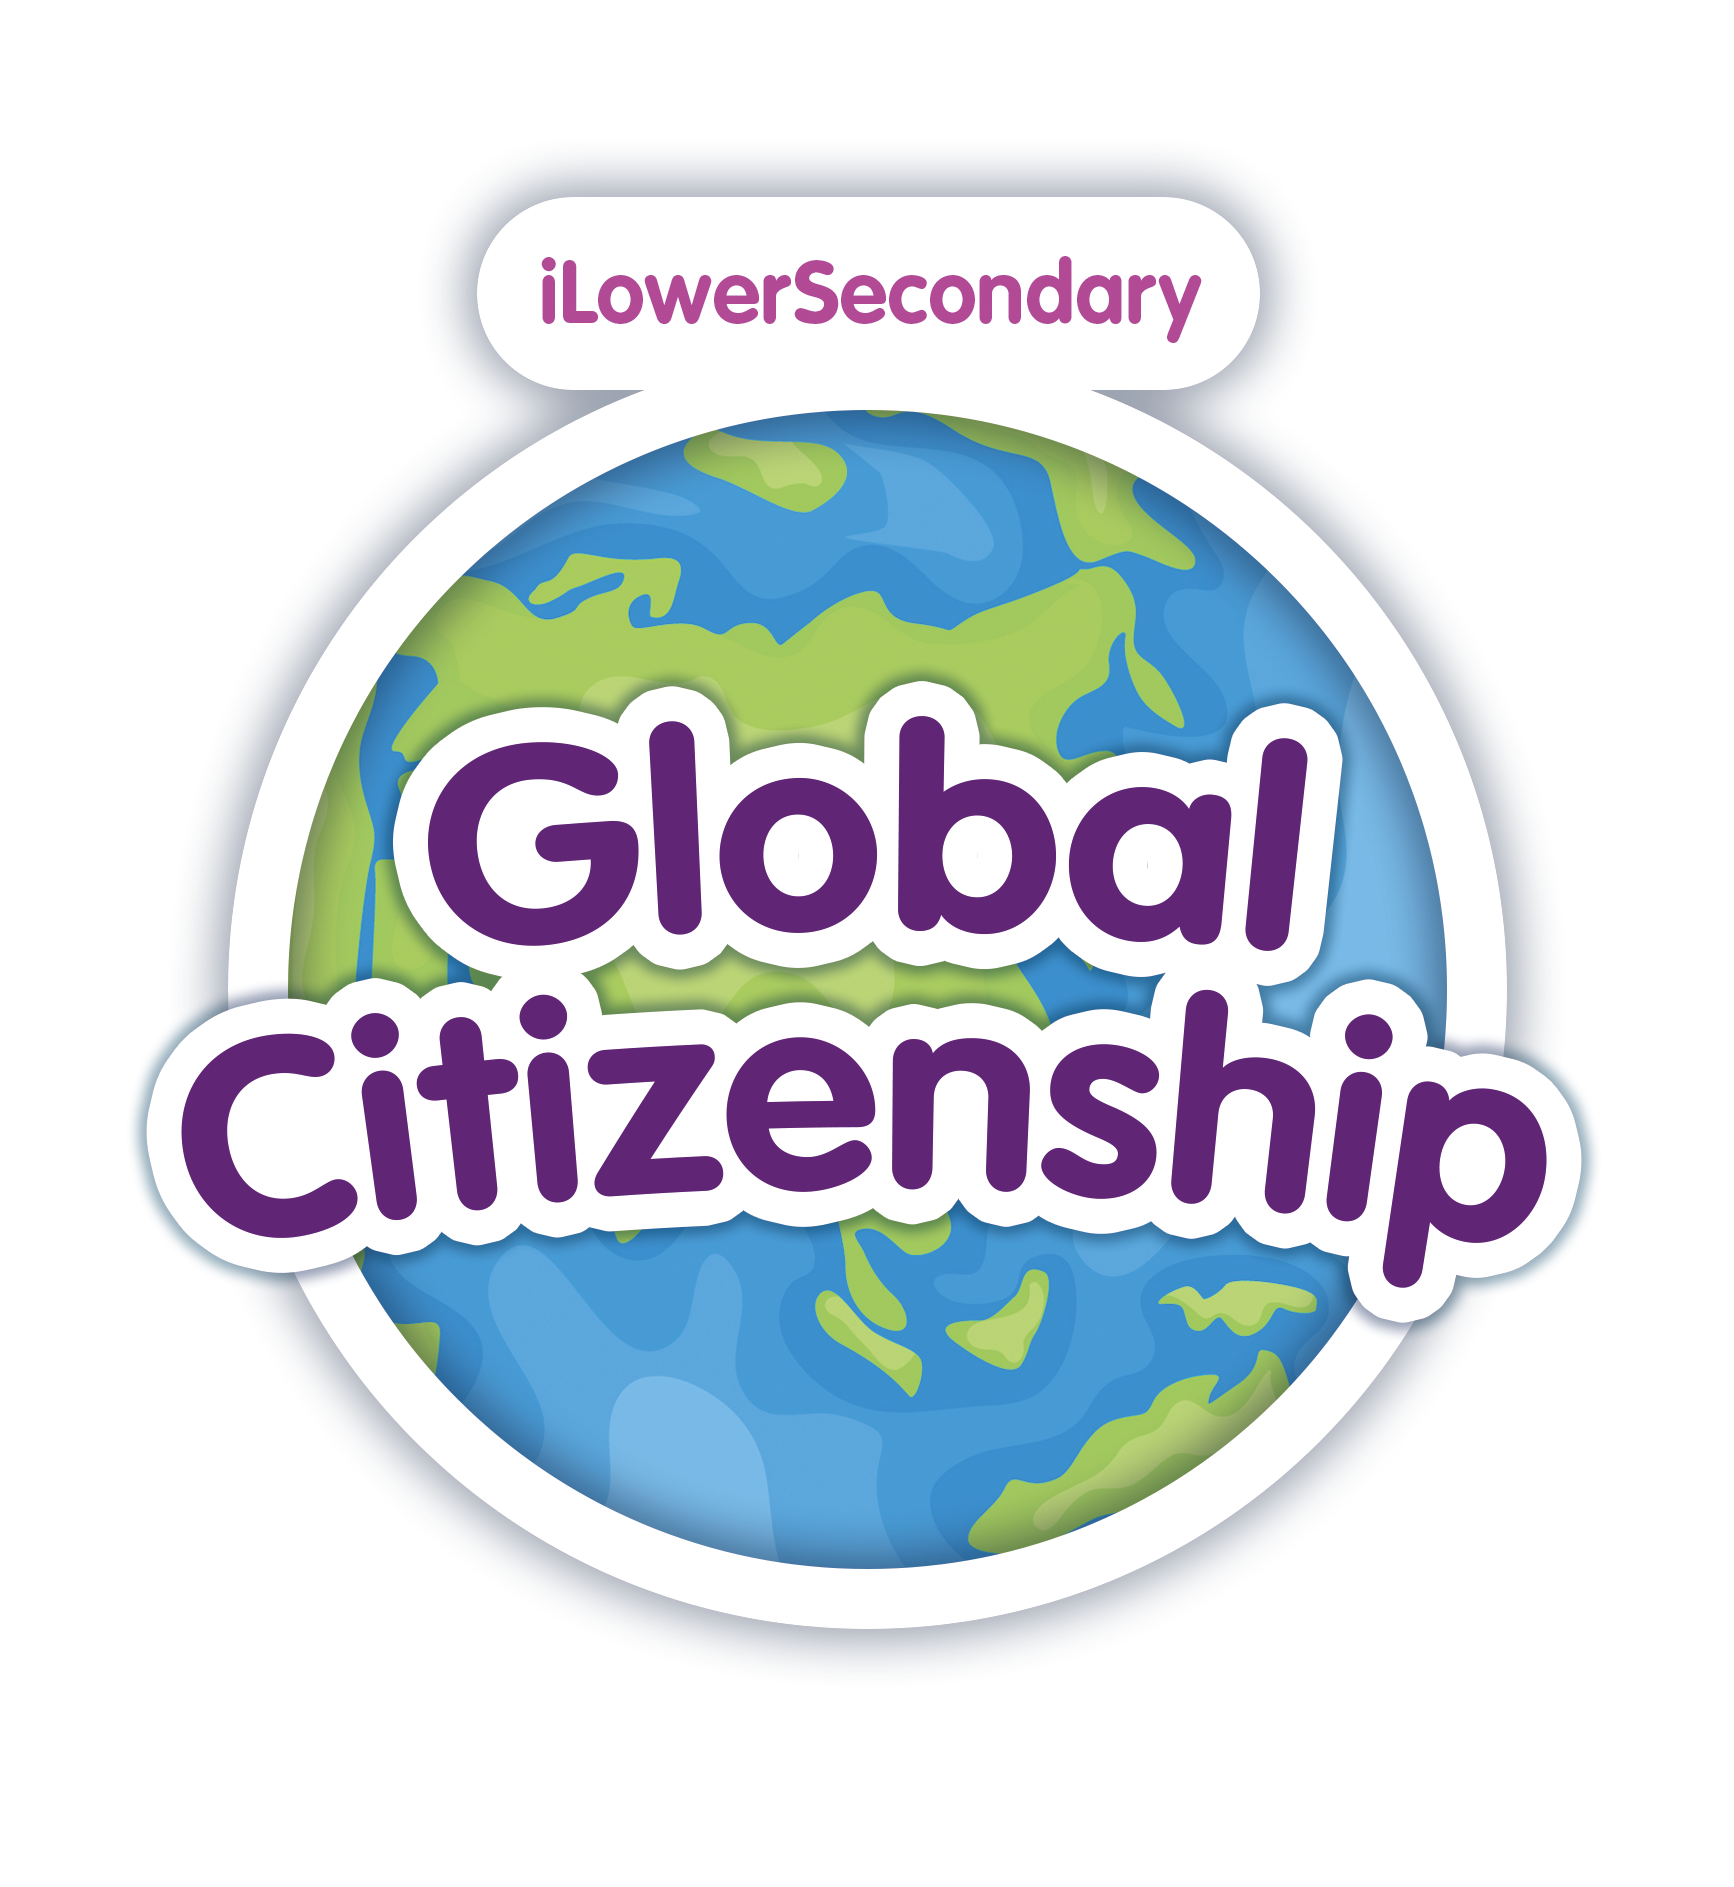 iLowerSecondary Global Citizenship badge 